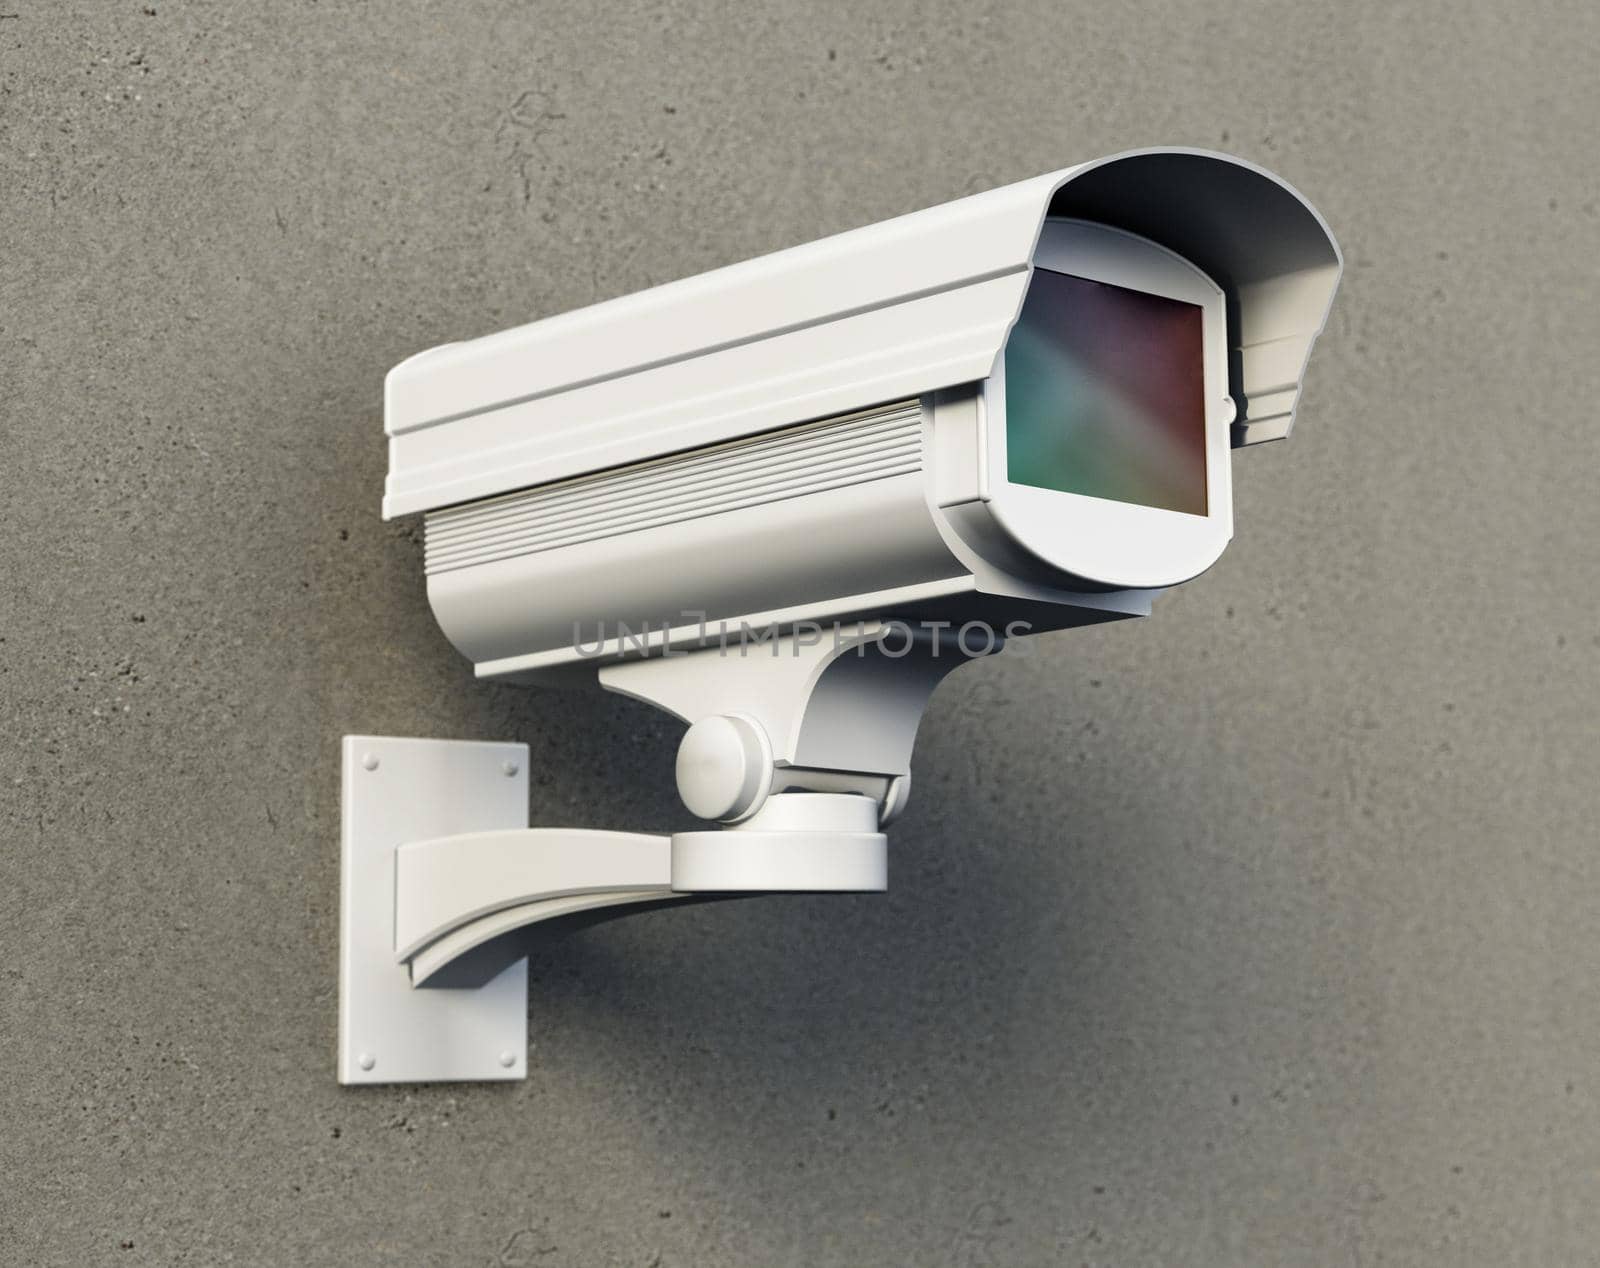 CCTV camera on the wall. 3D illustration.